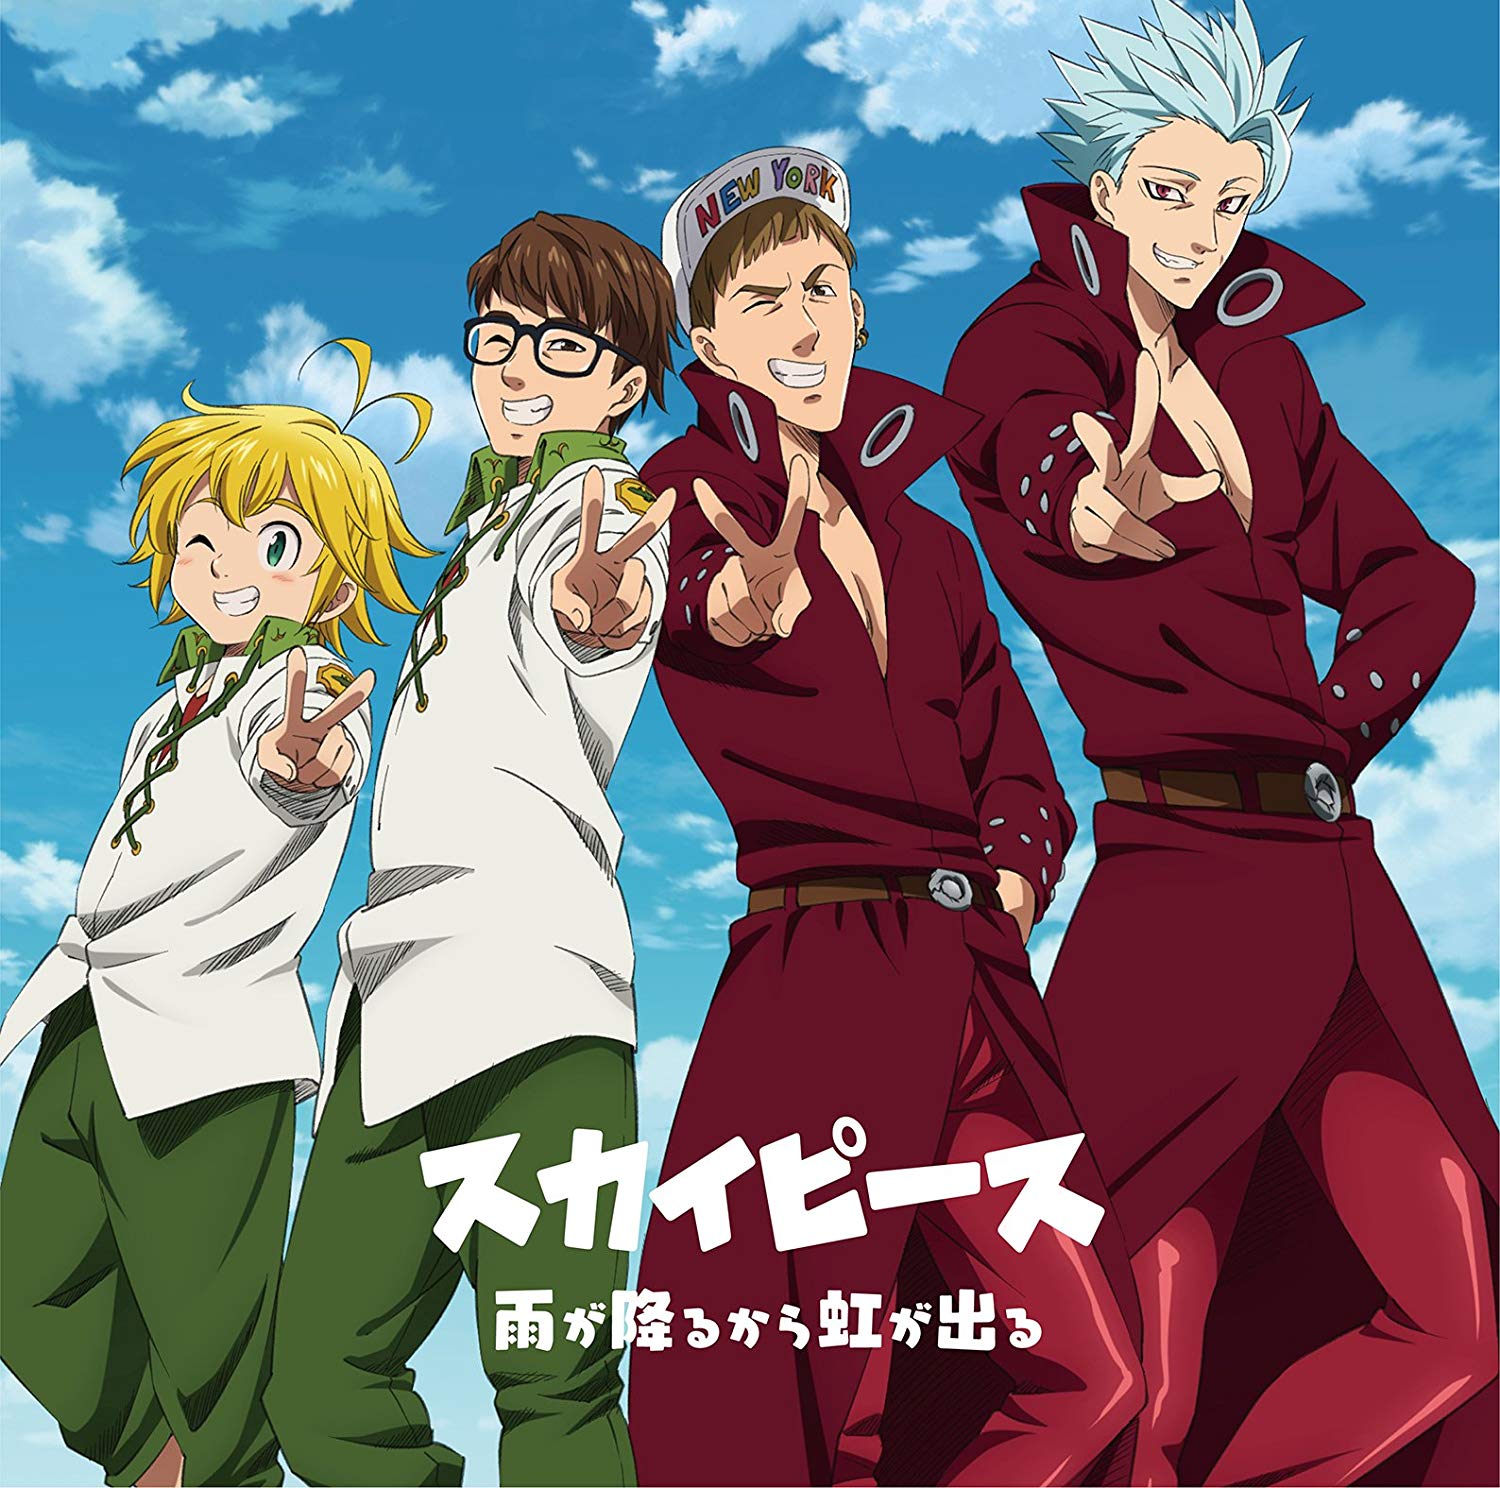 YESASIA: Yoake wa mada / Hikari tatsu Ame [Anime Ver.] (SINGLE+DVD